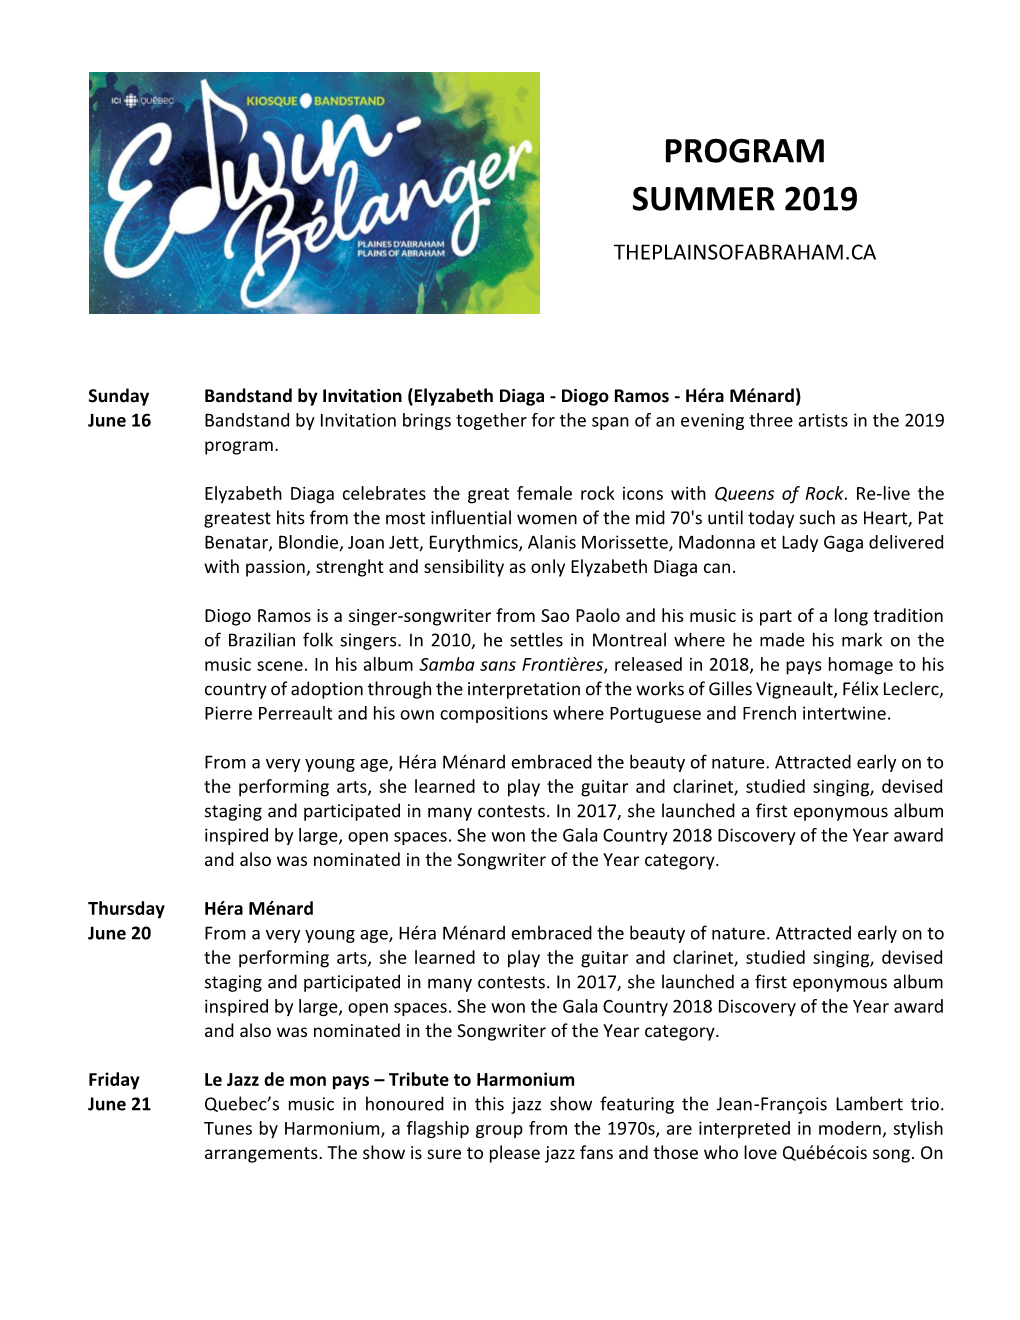 Program Summer 2019 Theplainsofabraham.Ca